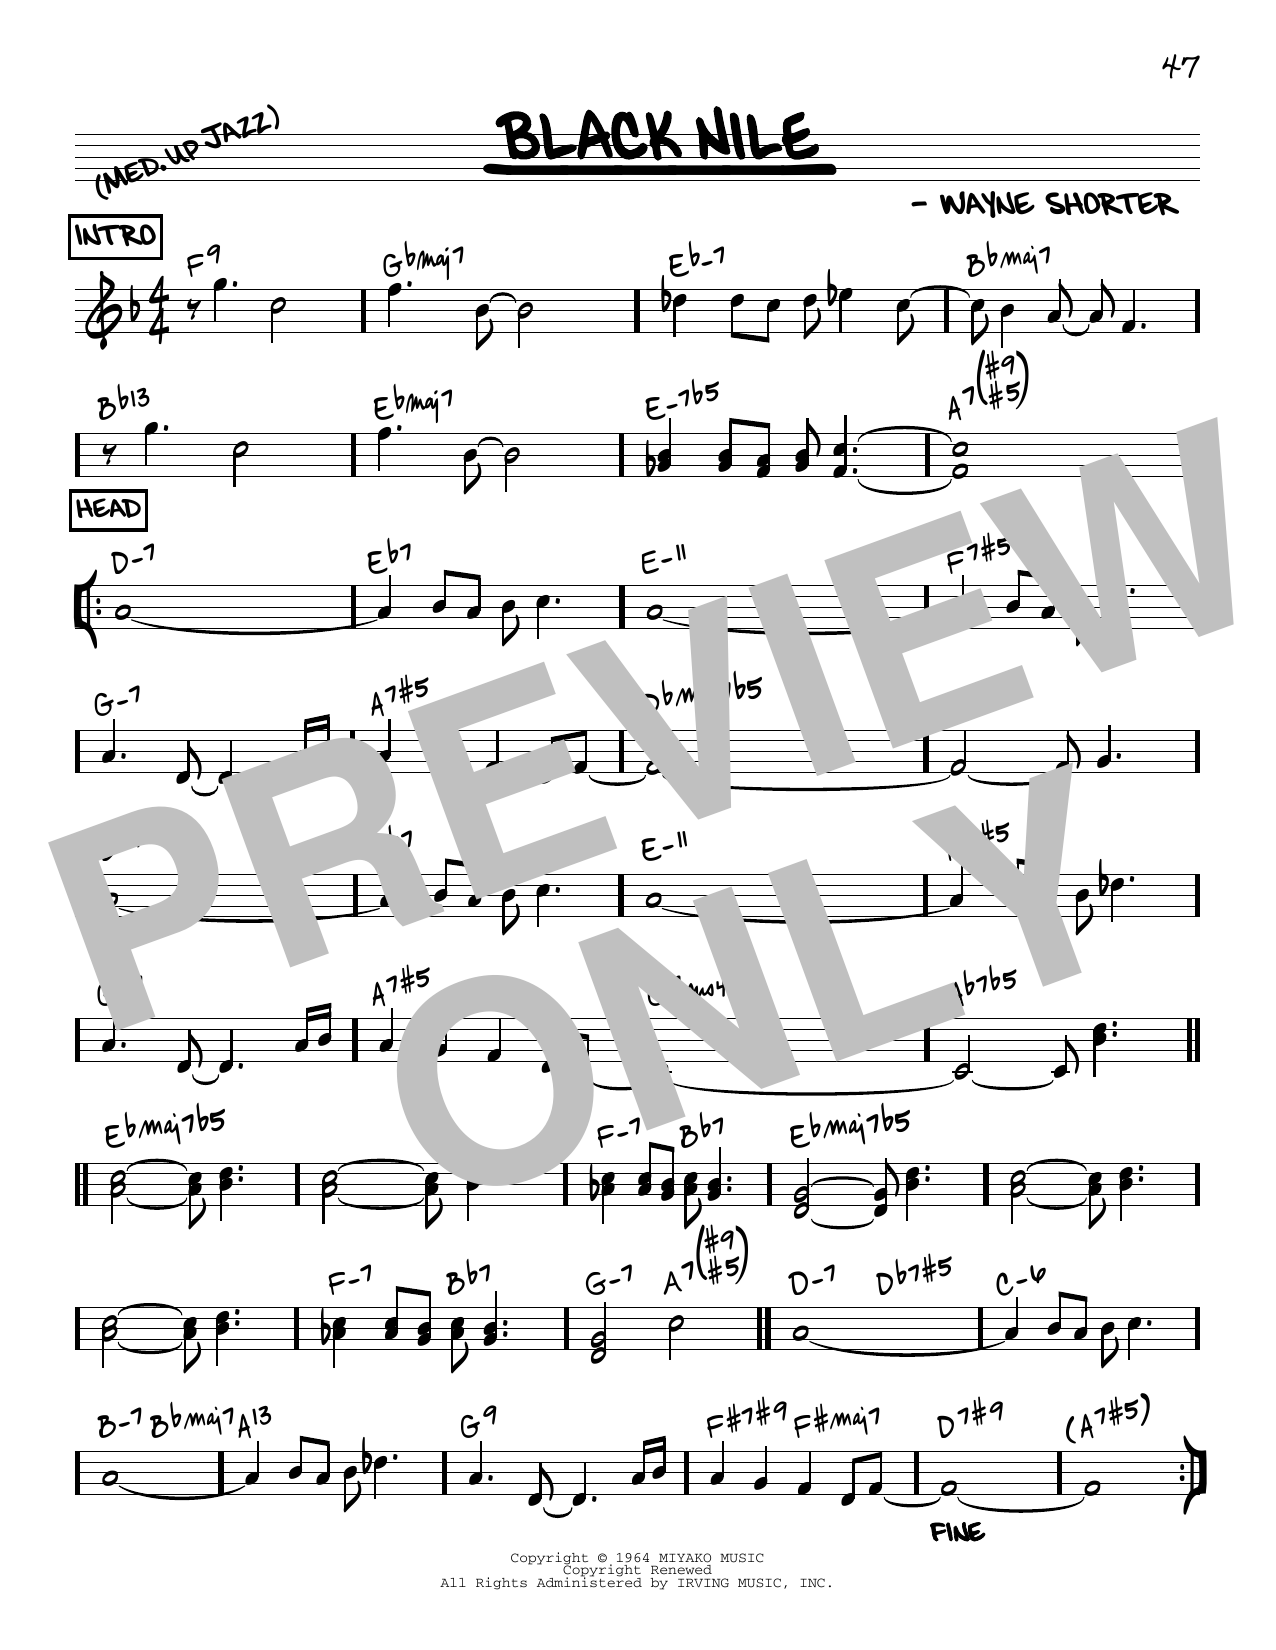 Wayne Shorter Black Nile [Reharmonized version] (arr. Jack Grassel) Sheet Music Notes & Chords for Real Book – Melody & Chords - Download or Print PDF